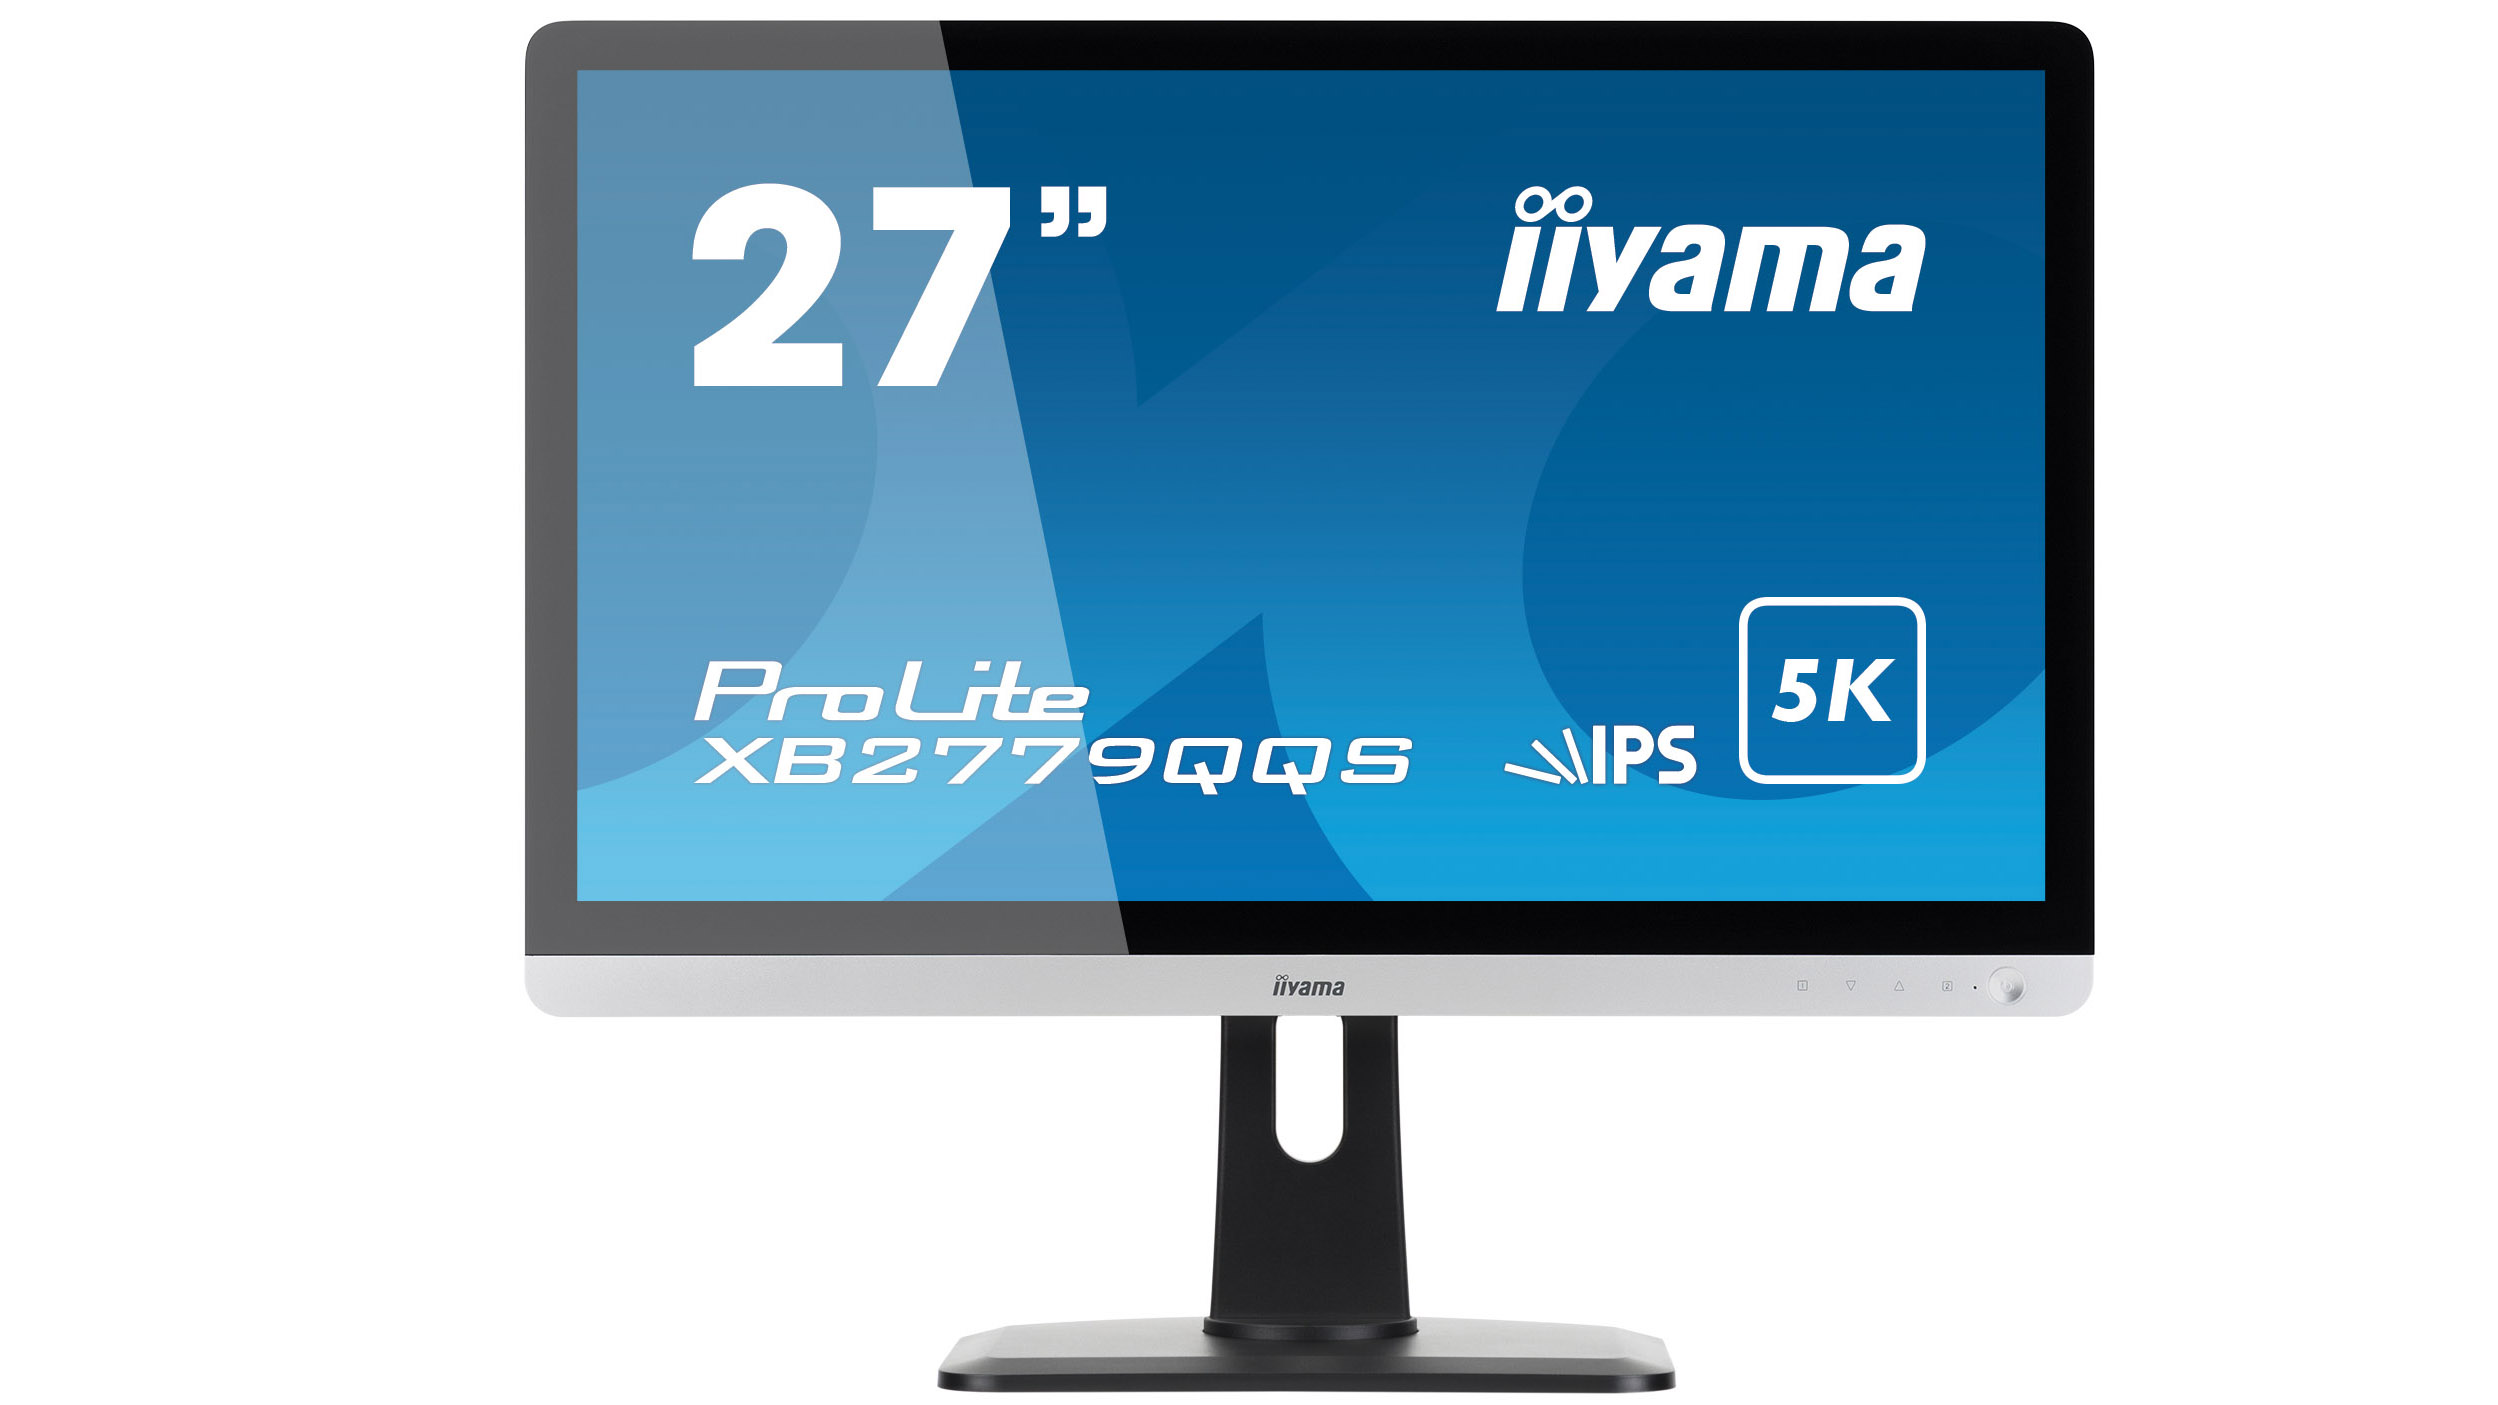 Iiyama 5K IPS LED Monitor